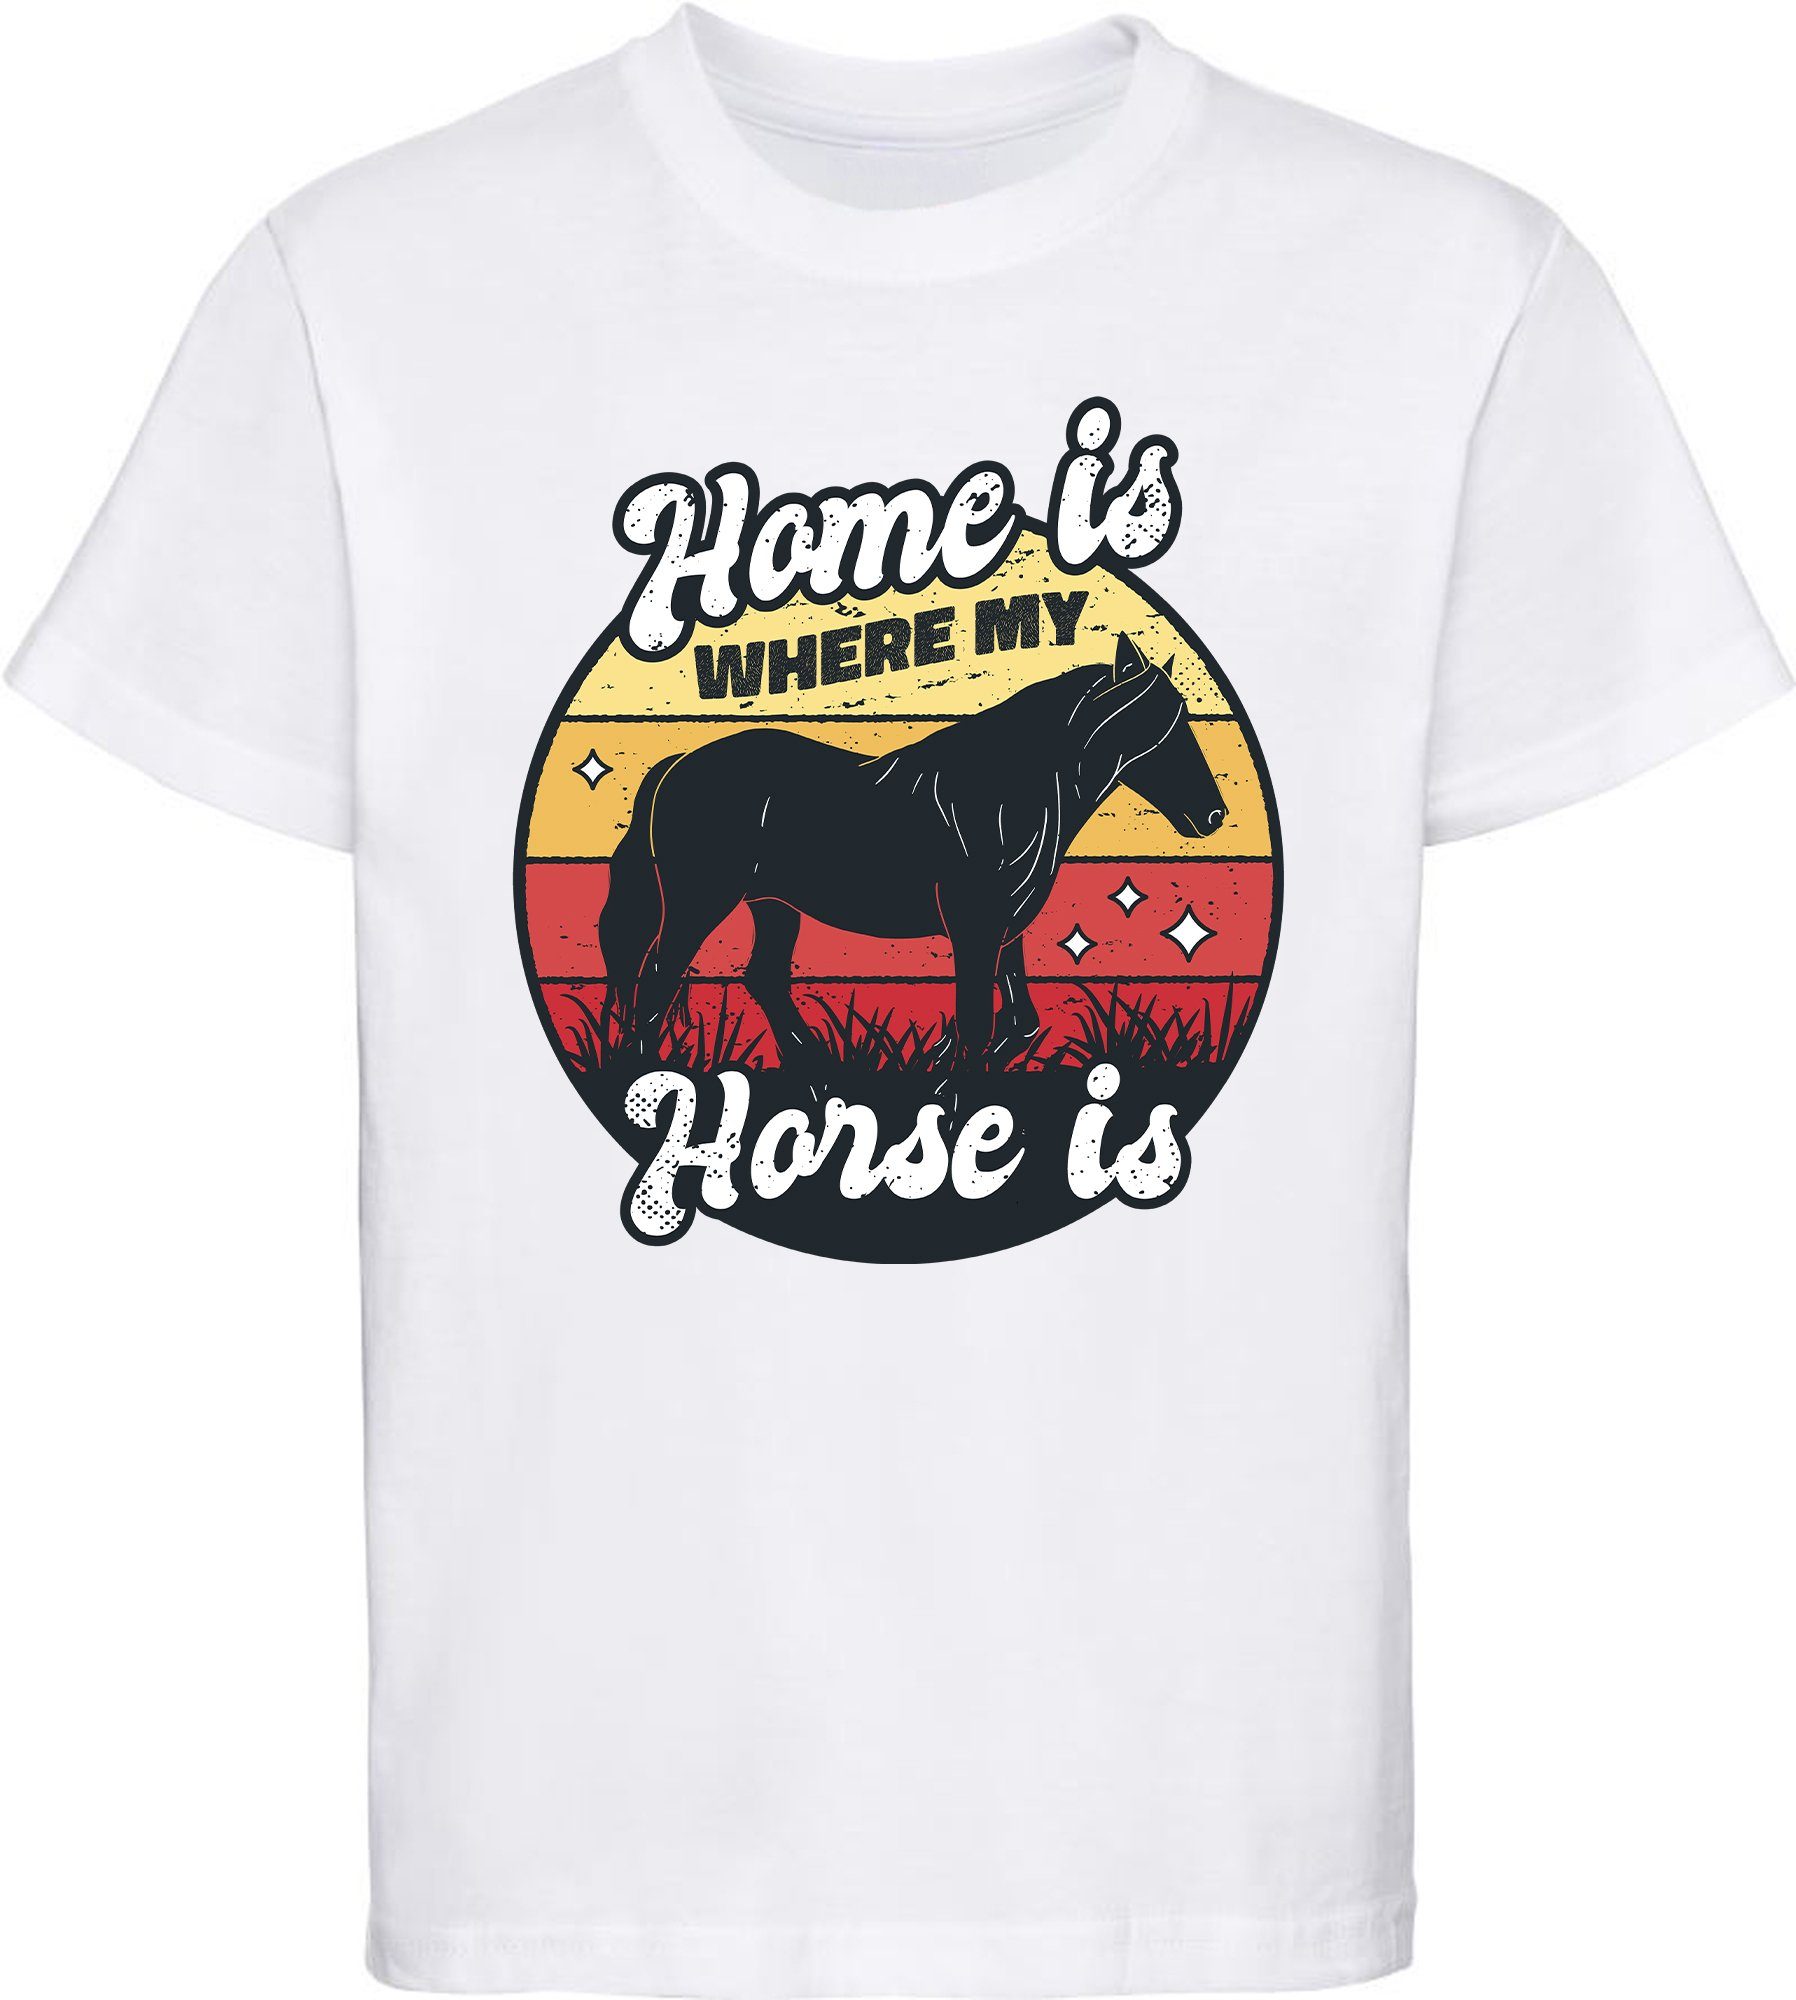 MyDesign24 Print-Shirt Home is bedrucktes Mädchen Aufdruck, weiss where is mit Baumwollshirt T-Shirt horse i156 my 